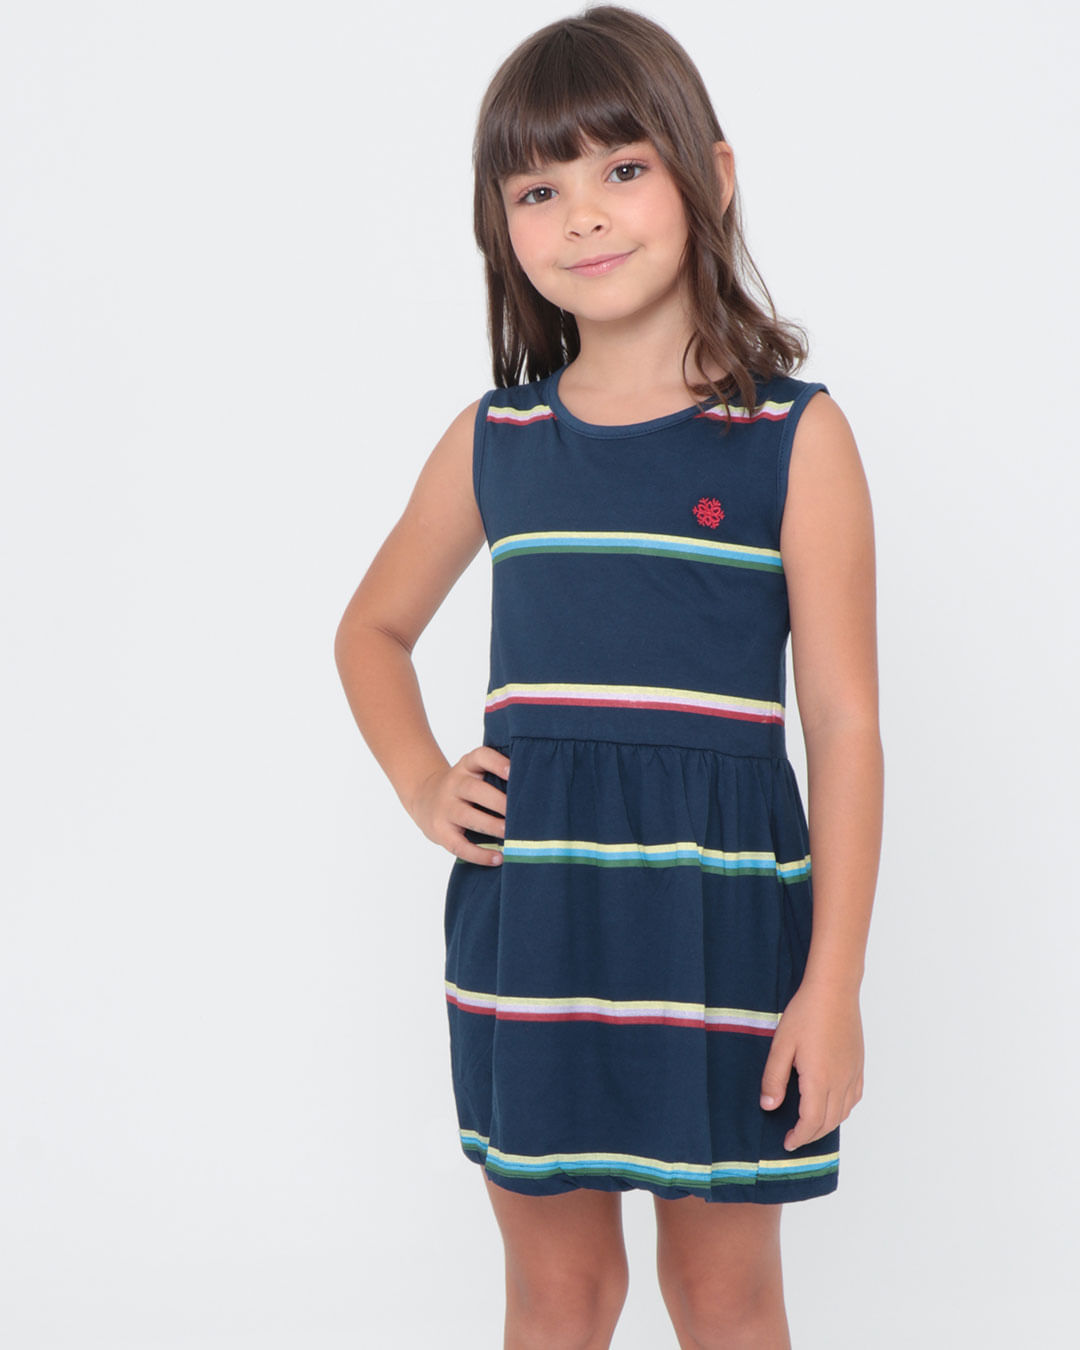 Vestido-Infantil-Regata-Estampa-Listras-Azul-Marinho